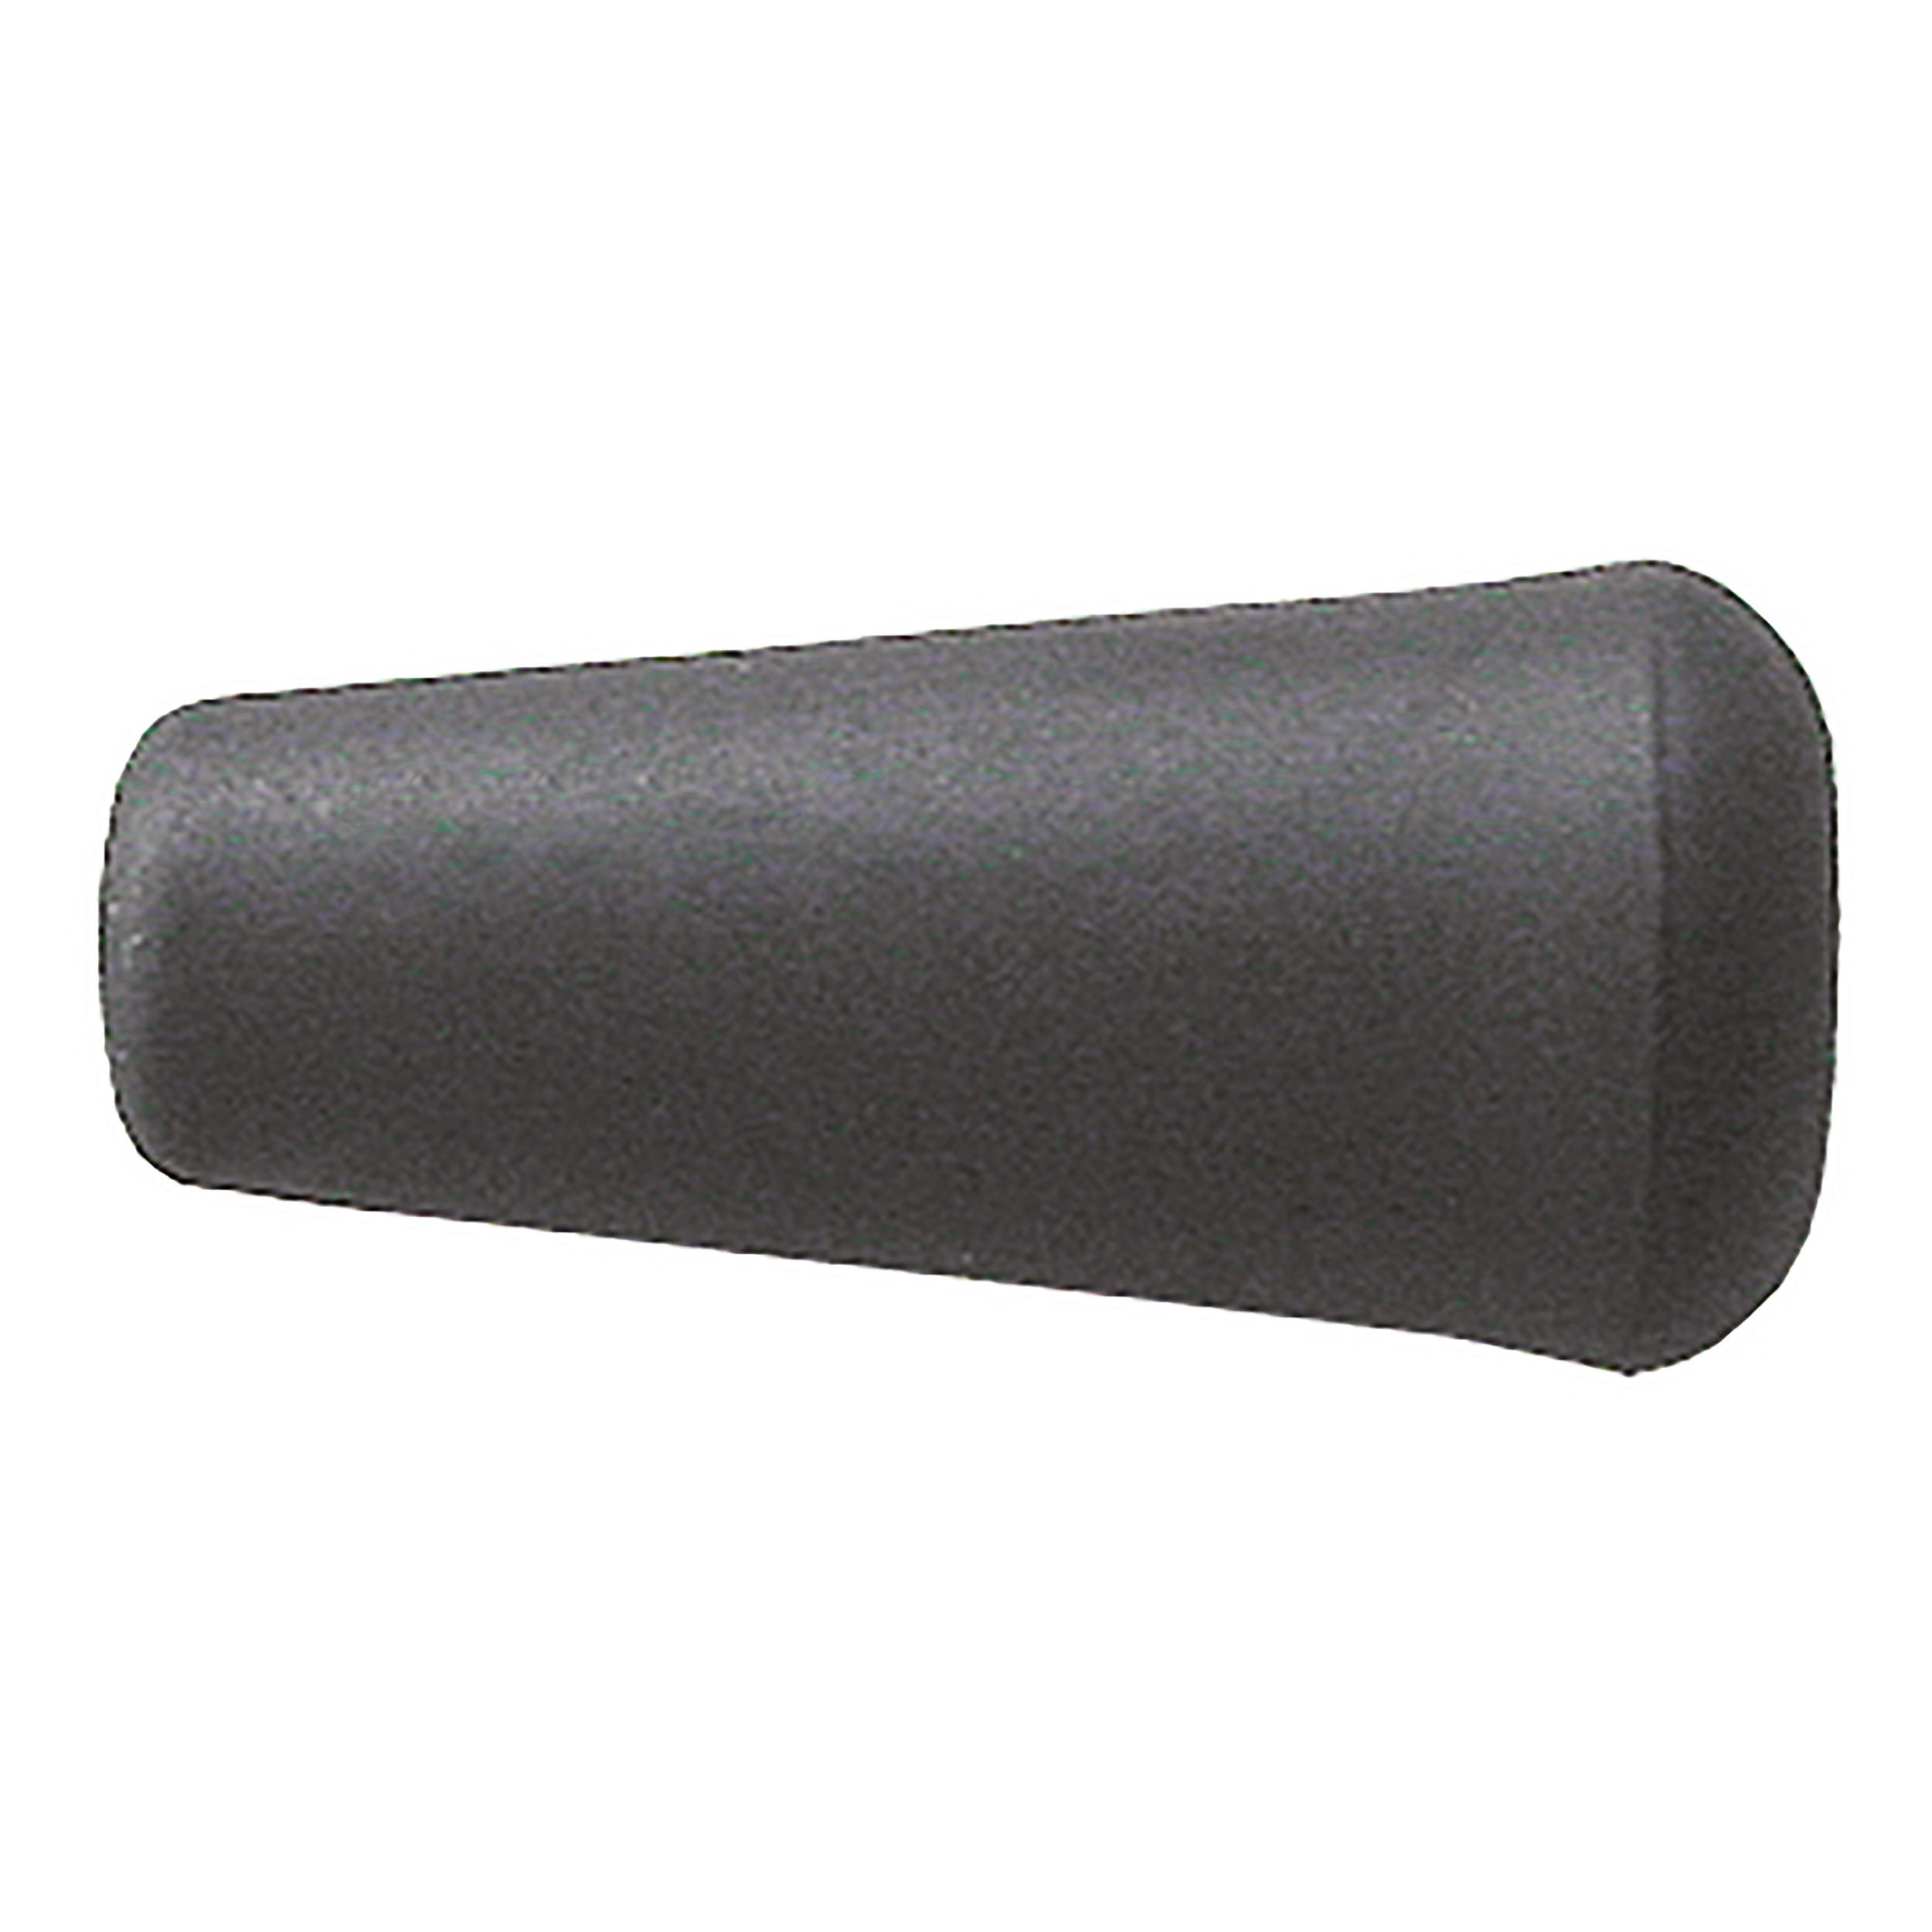 Rubber cap, material: TPU, length: 28 mm